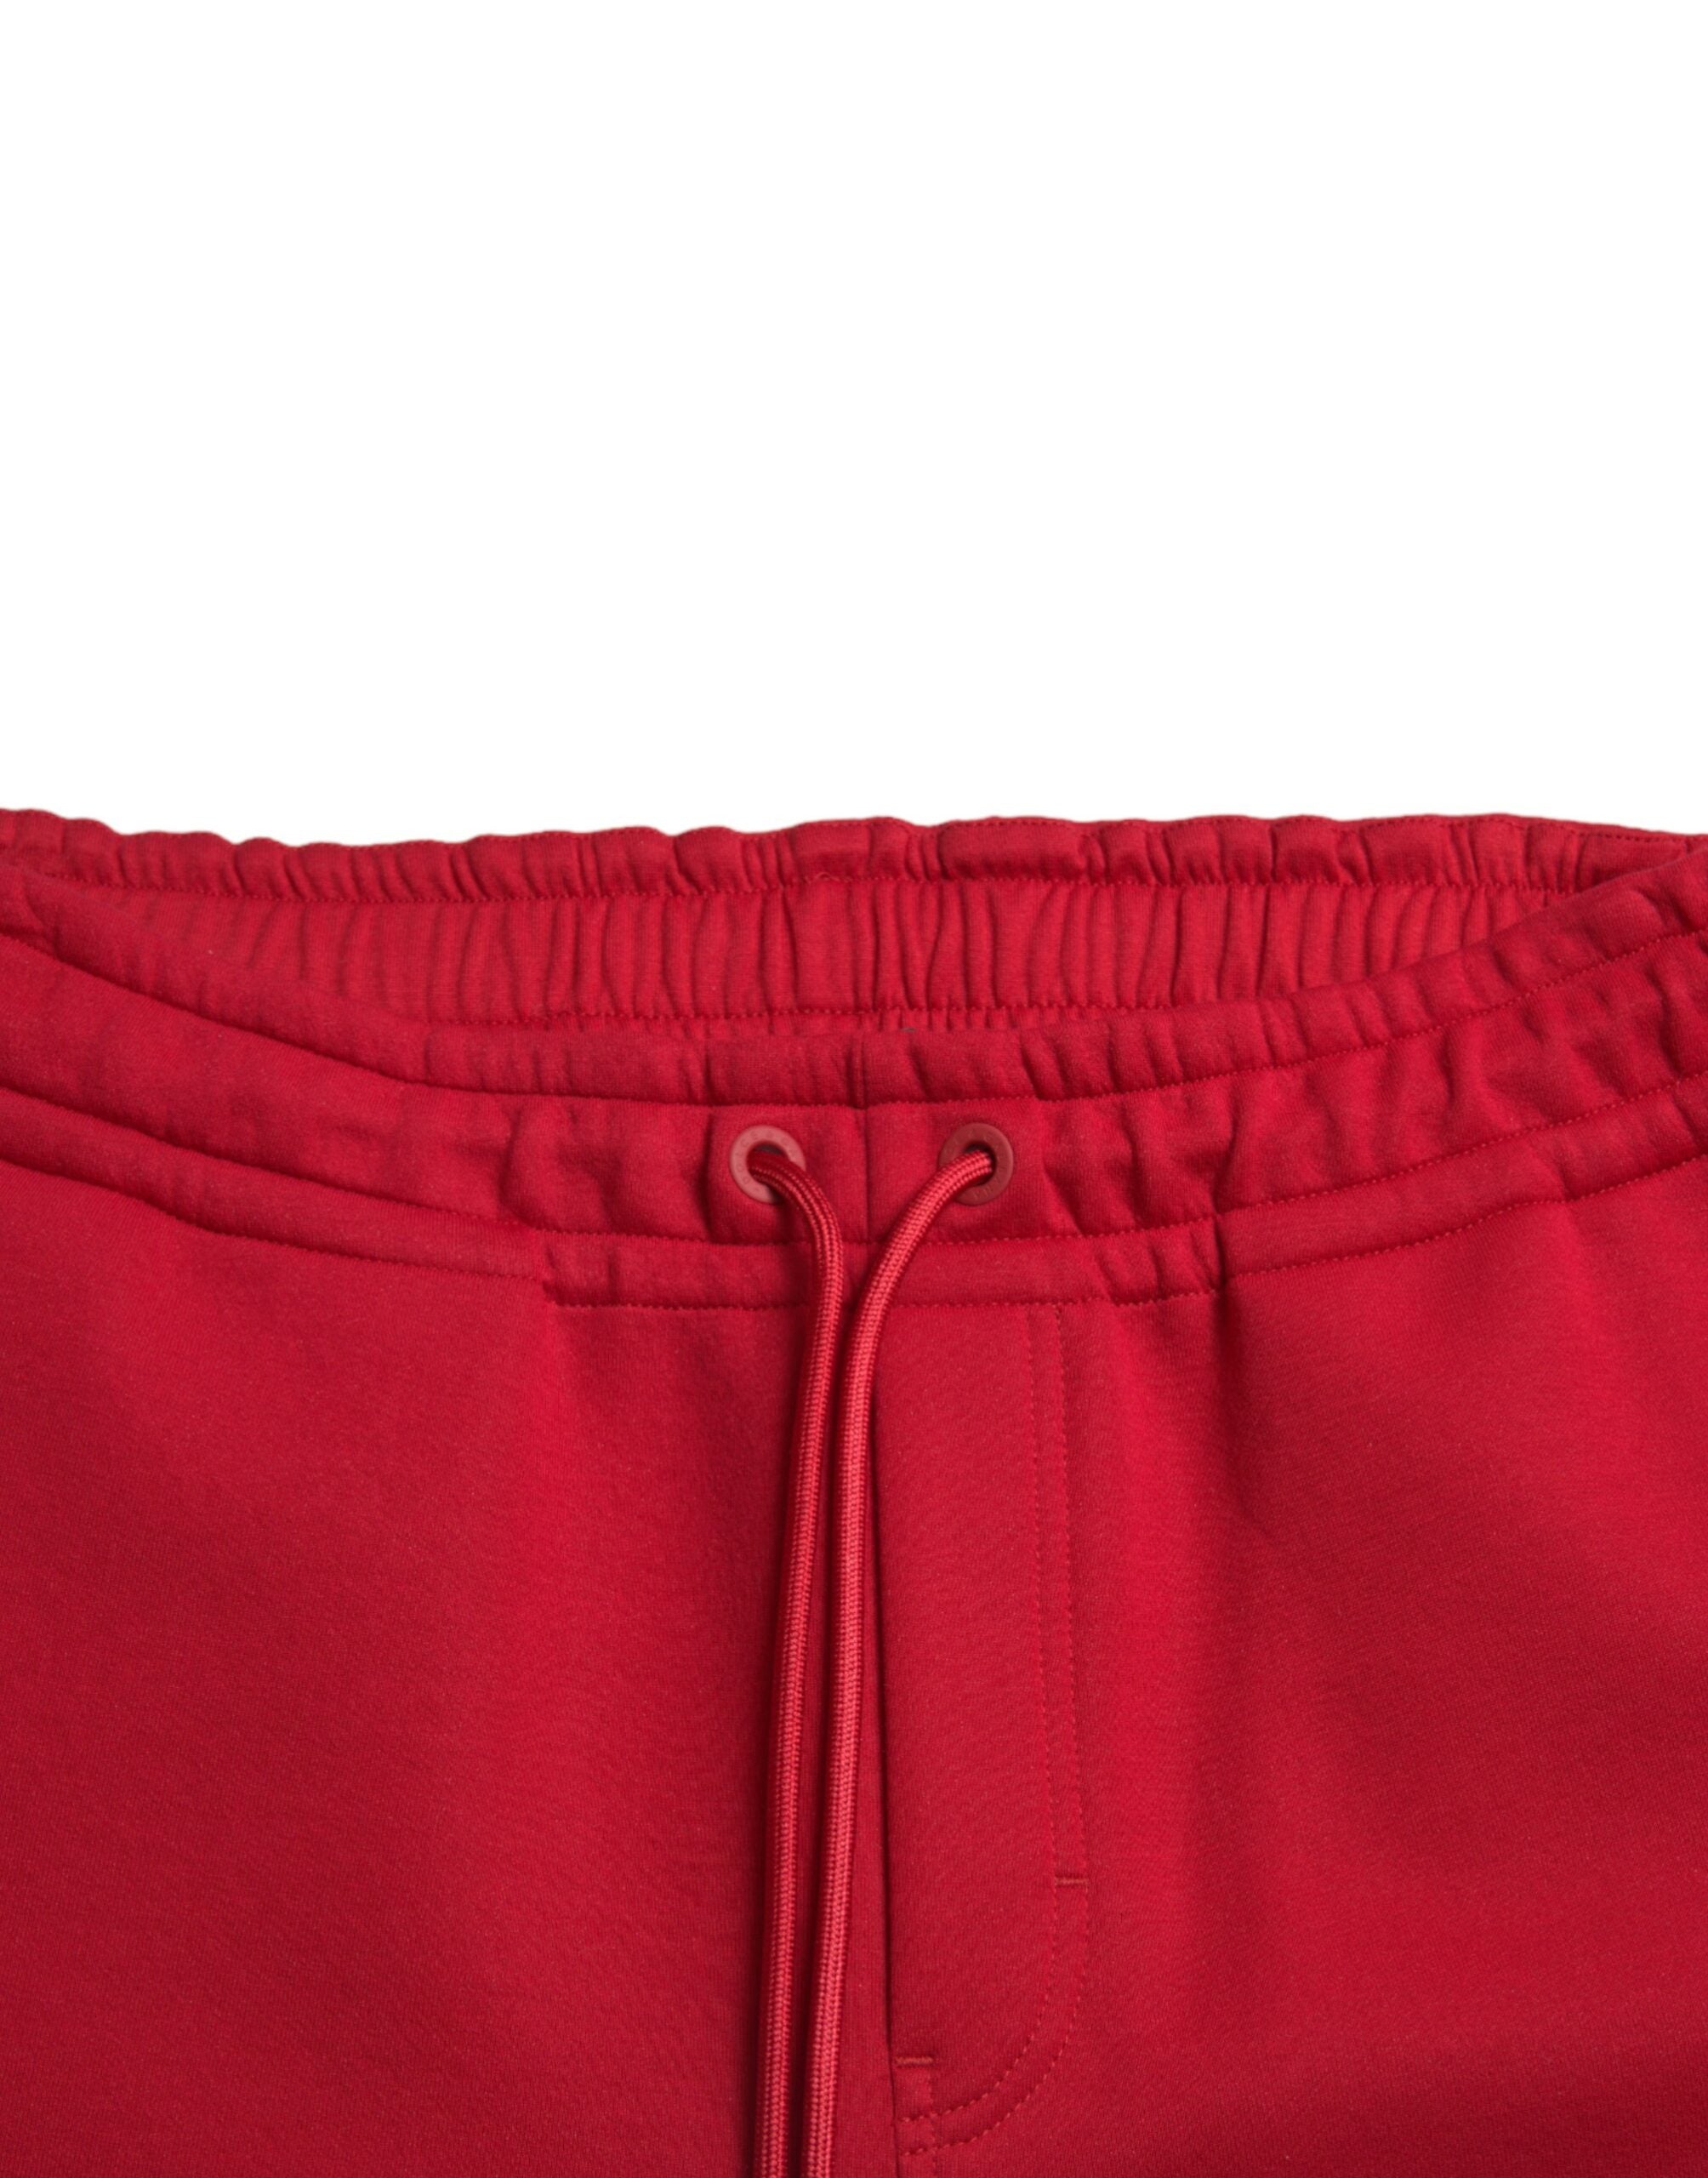 Dolce & Gabbana Sizzling Red Cotton Blend Jogger Pants